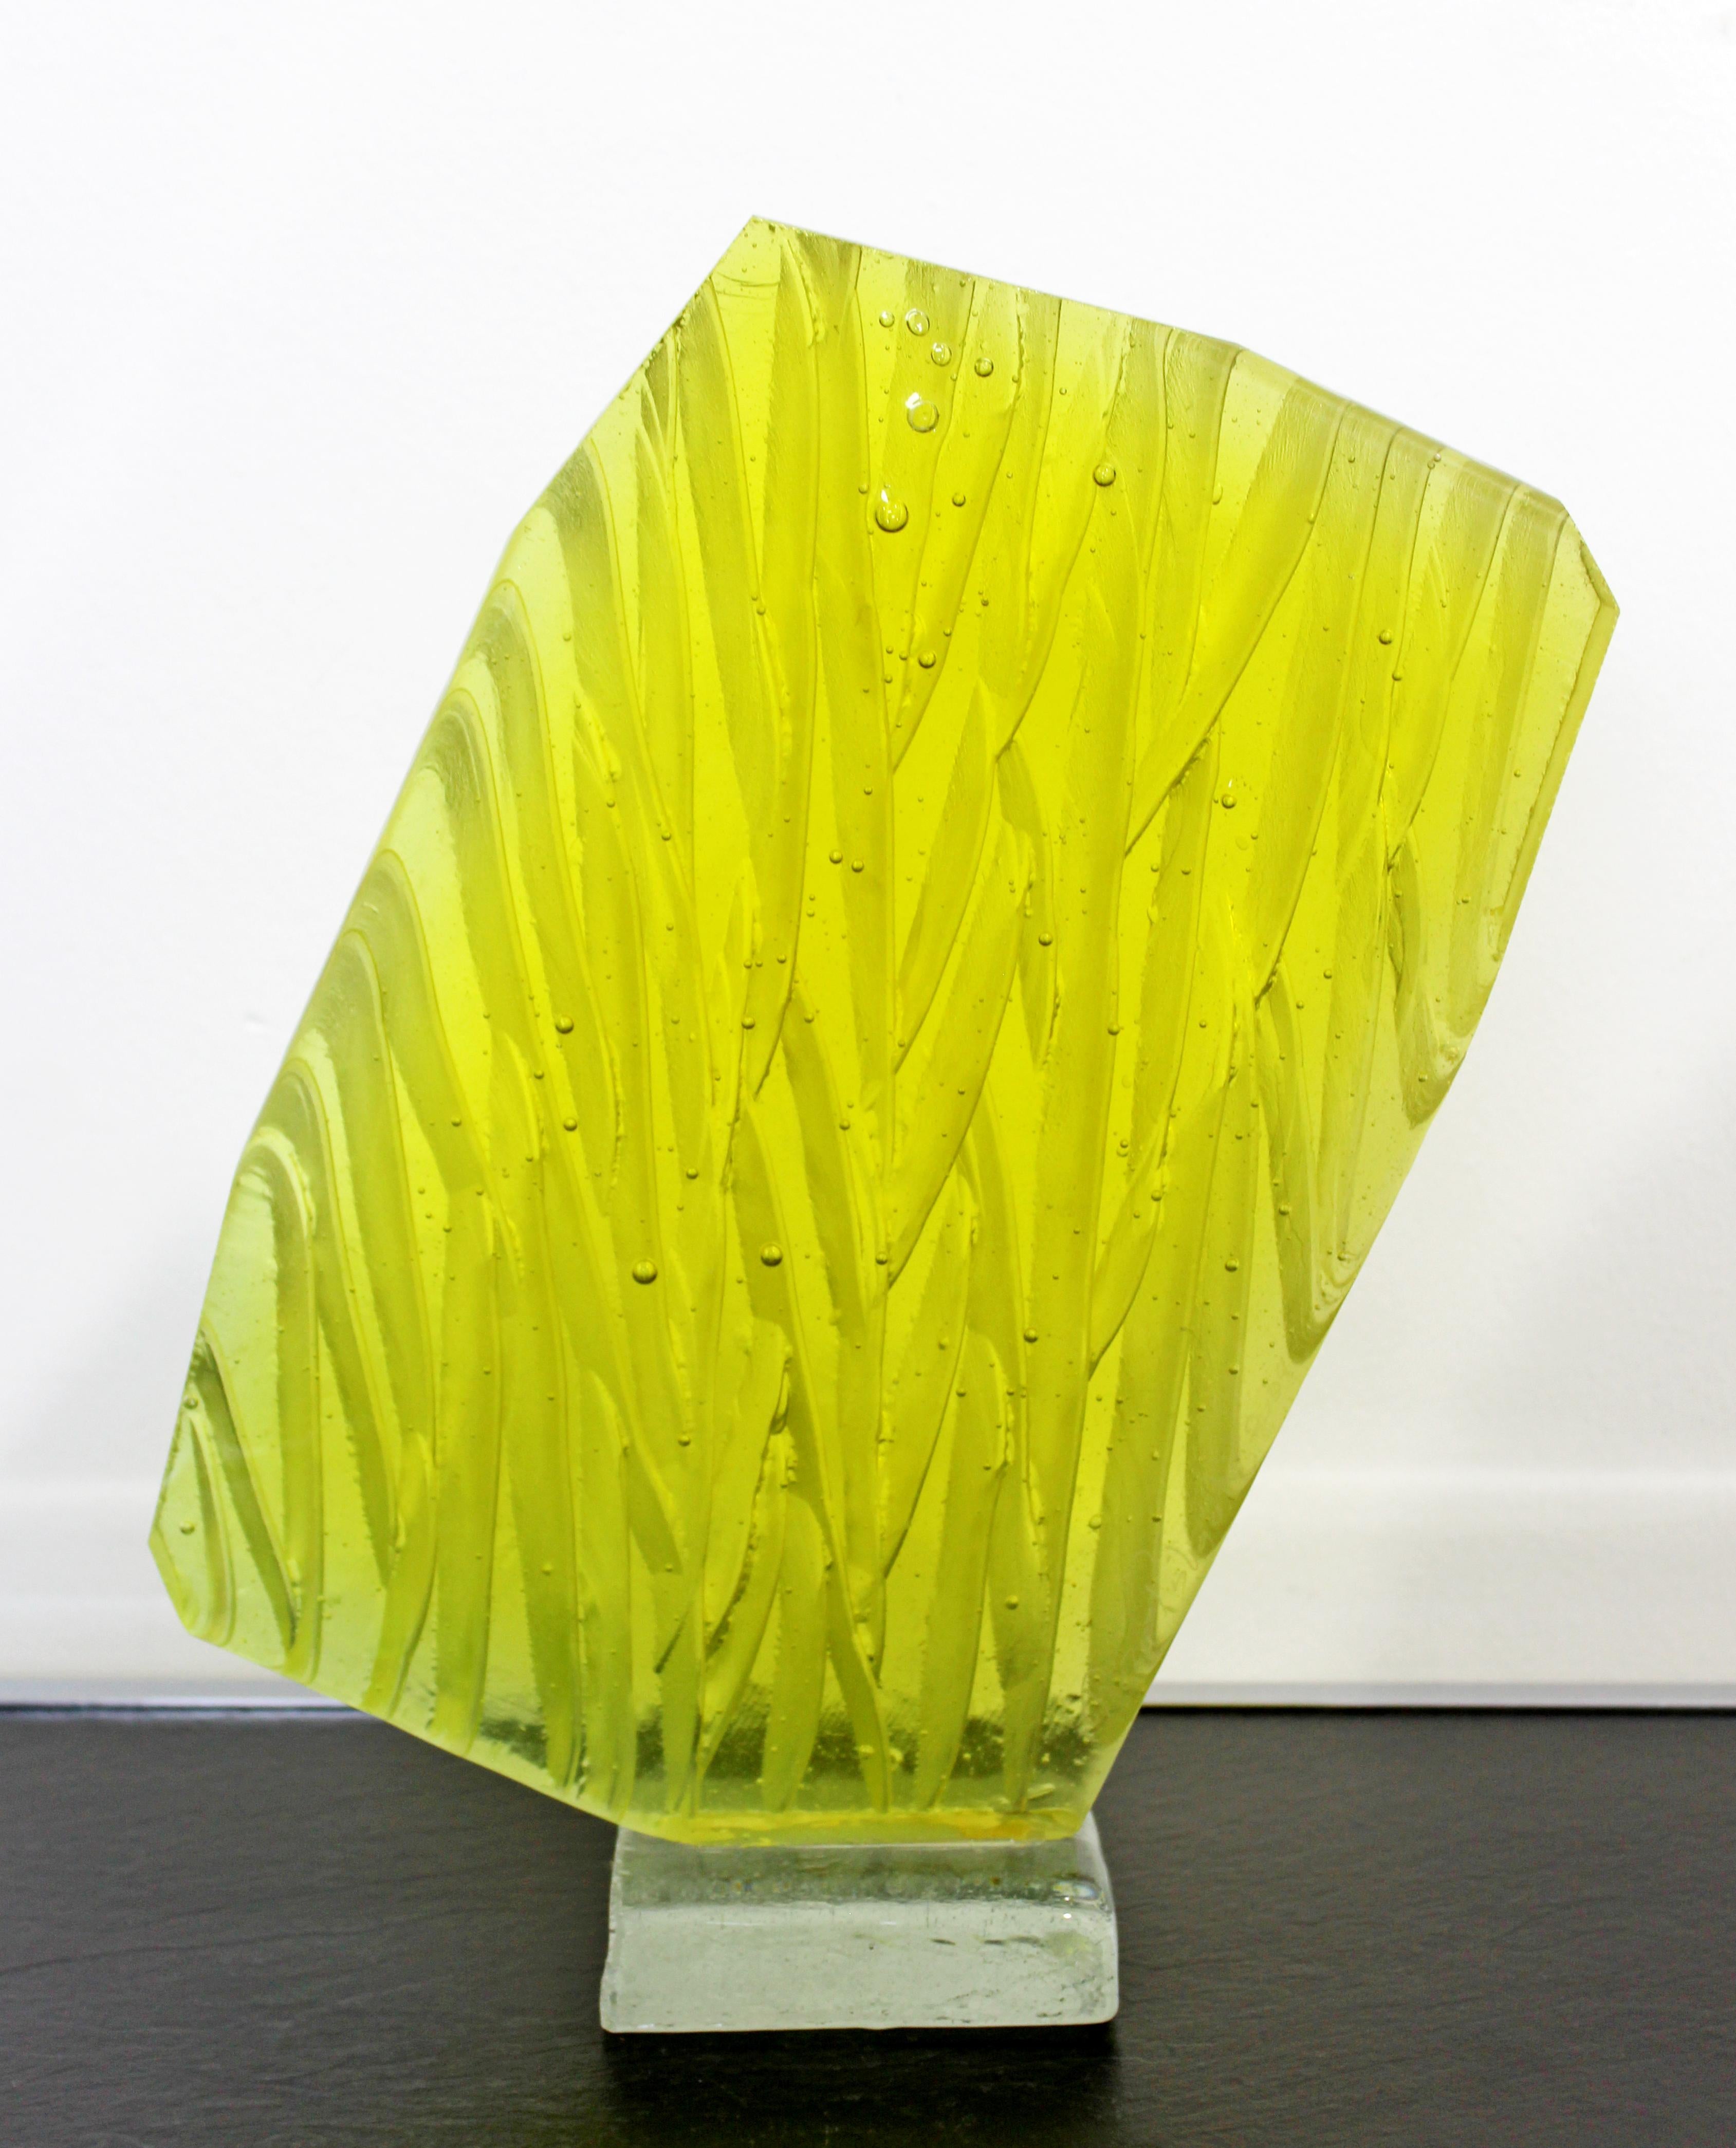 Contemporary Cast Glass Abstract Art Table Sculpture Signed Rezu Pishgahi 2009 2